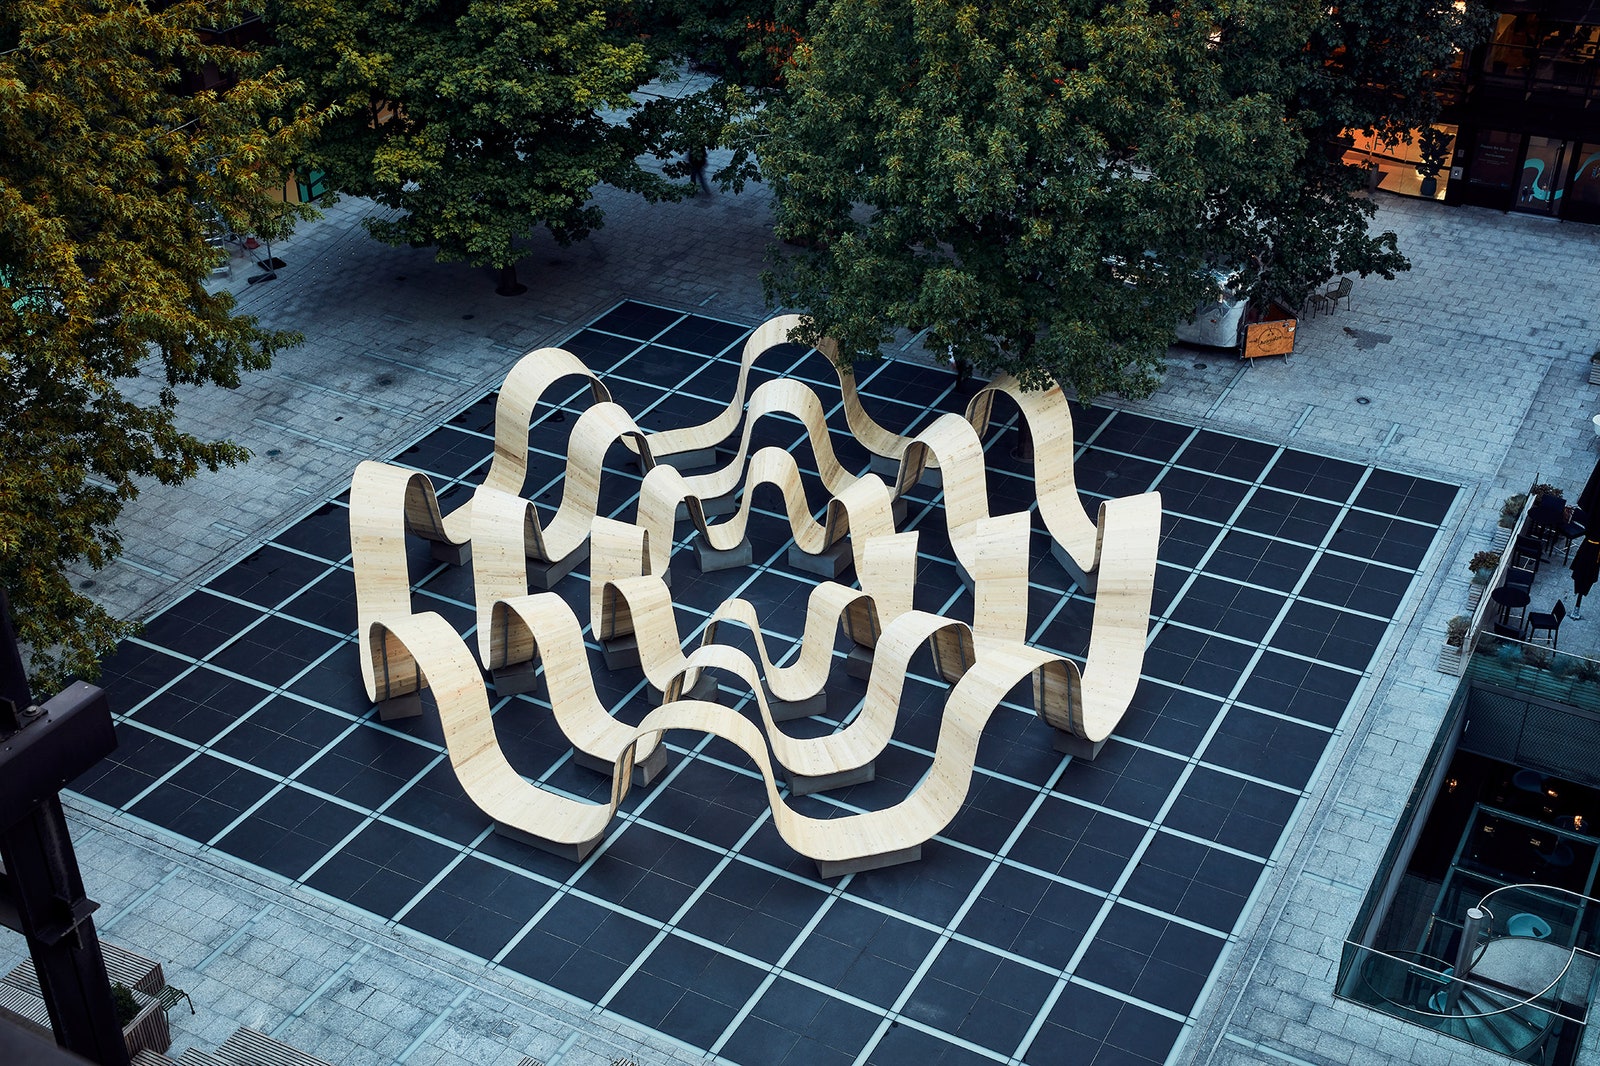 Функциональная скульптура от Пола Кокседжа на London Design Festival 2019